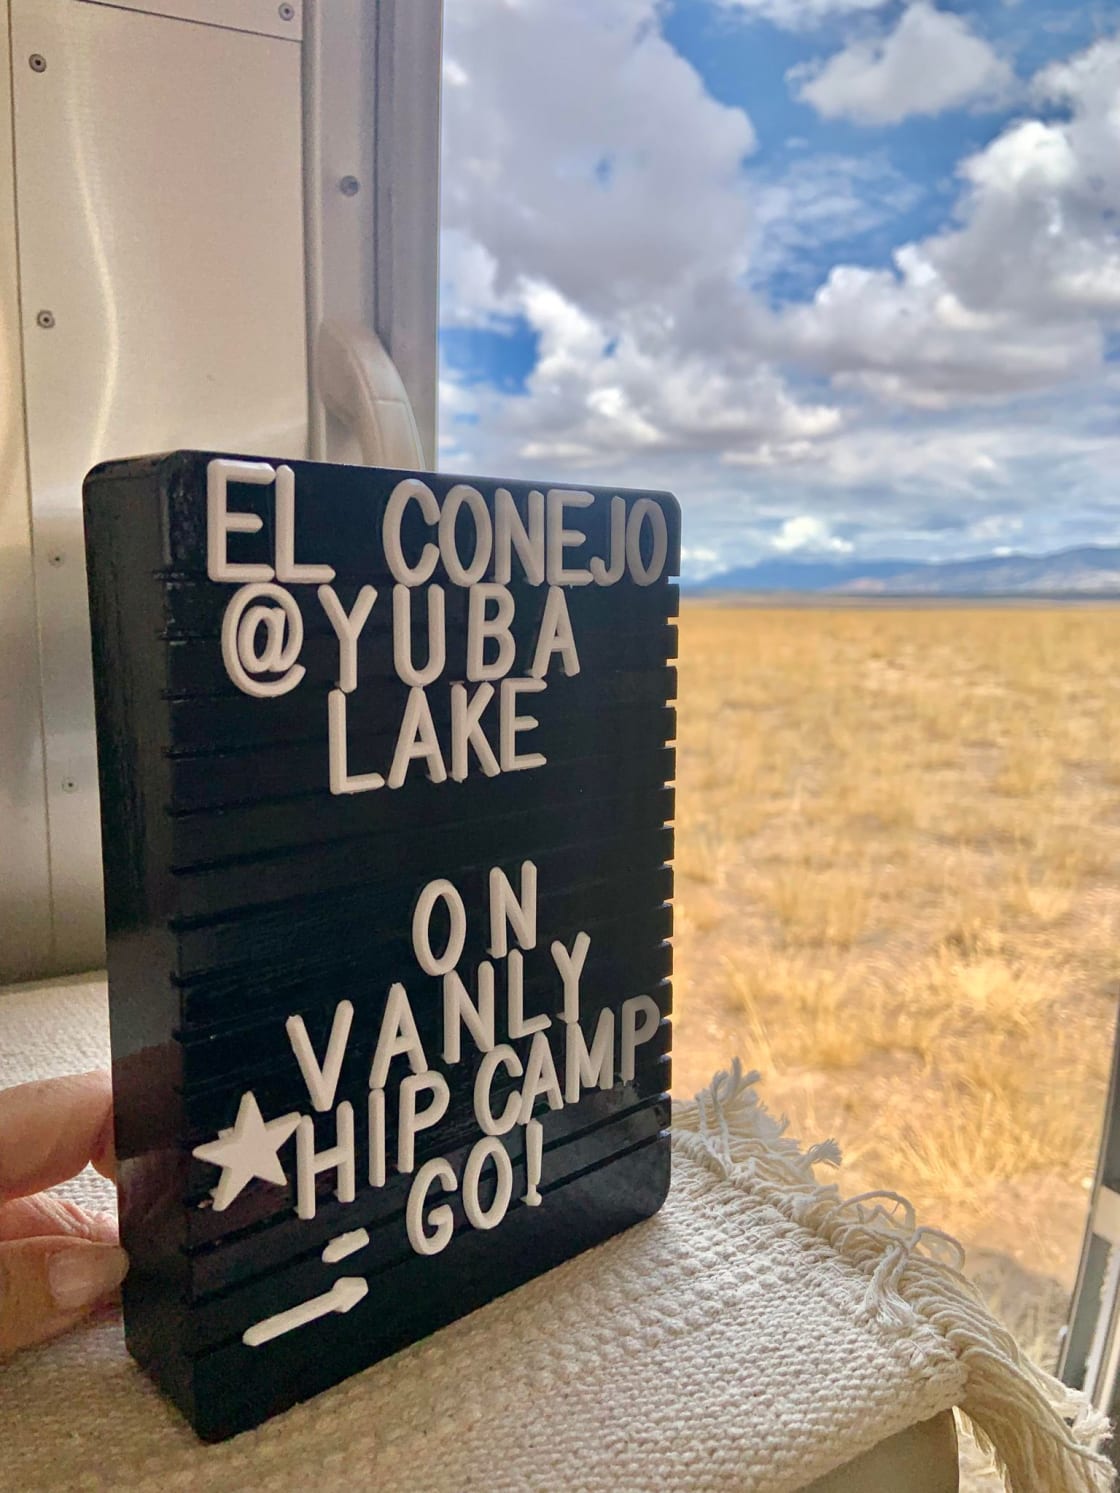 Yuba - El Conejo Lakeside